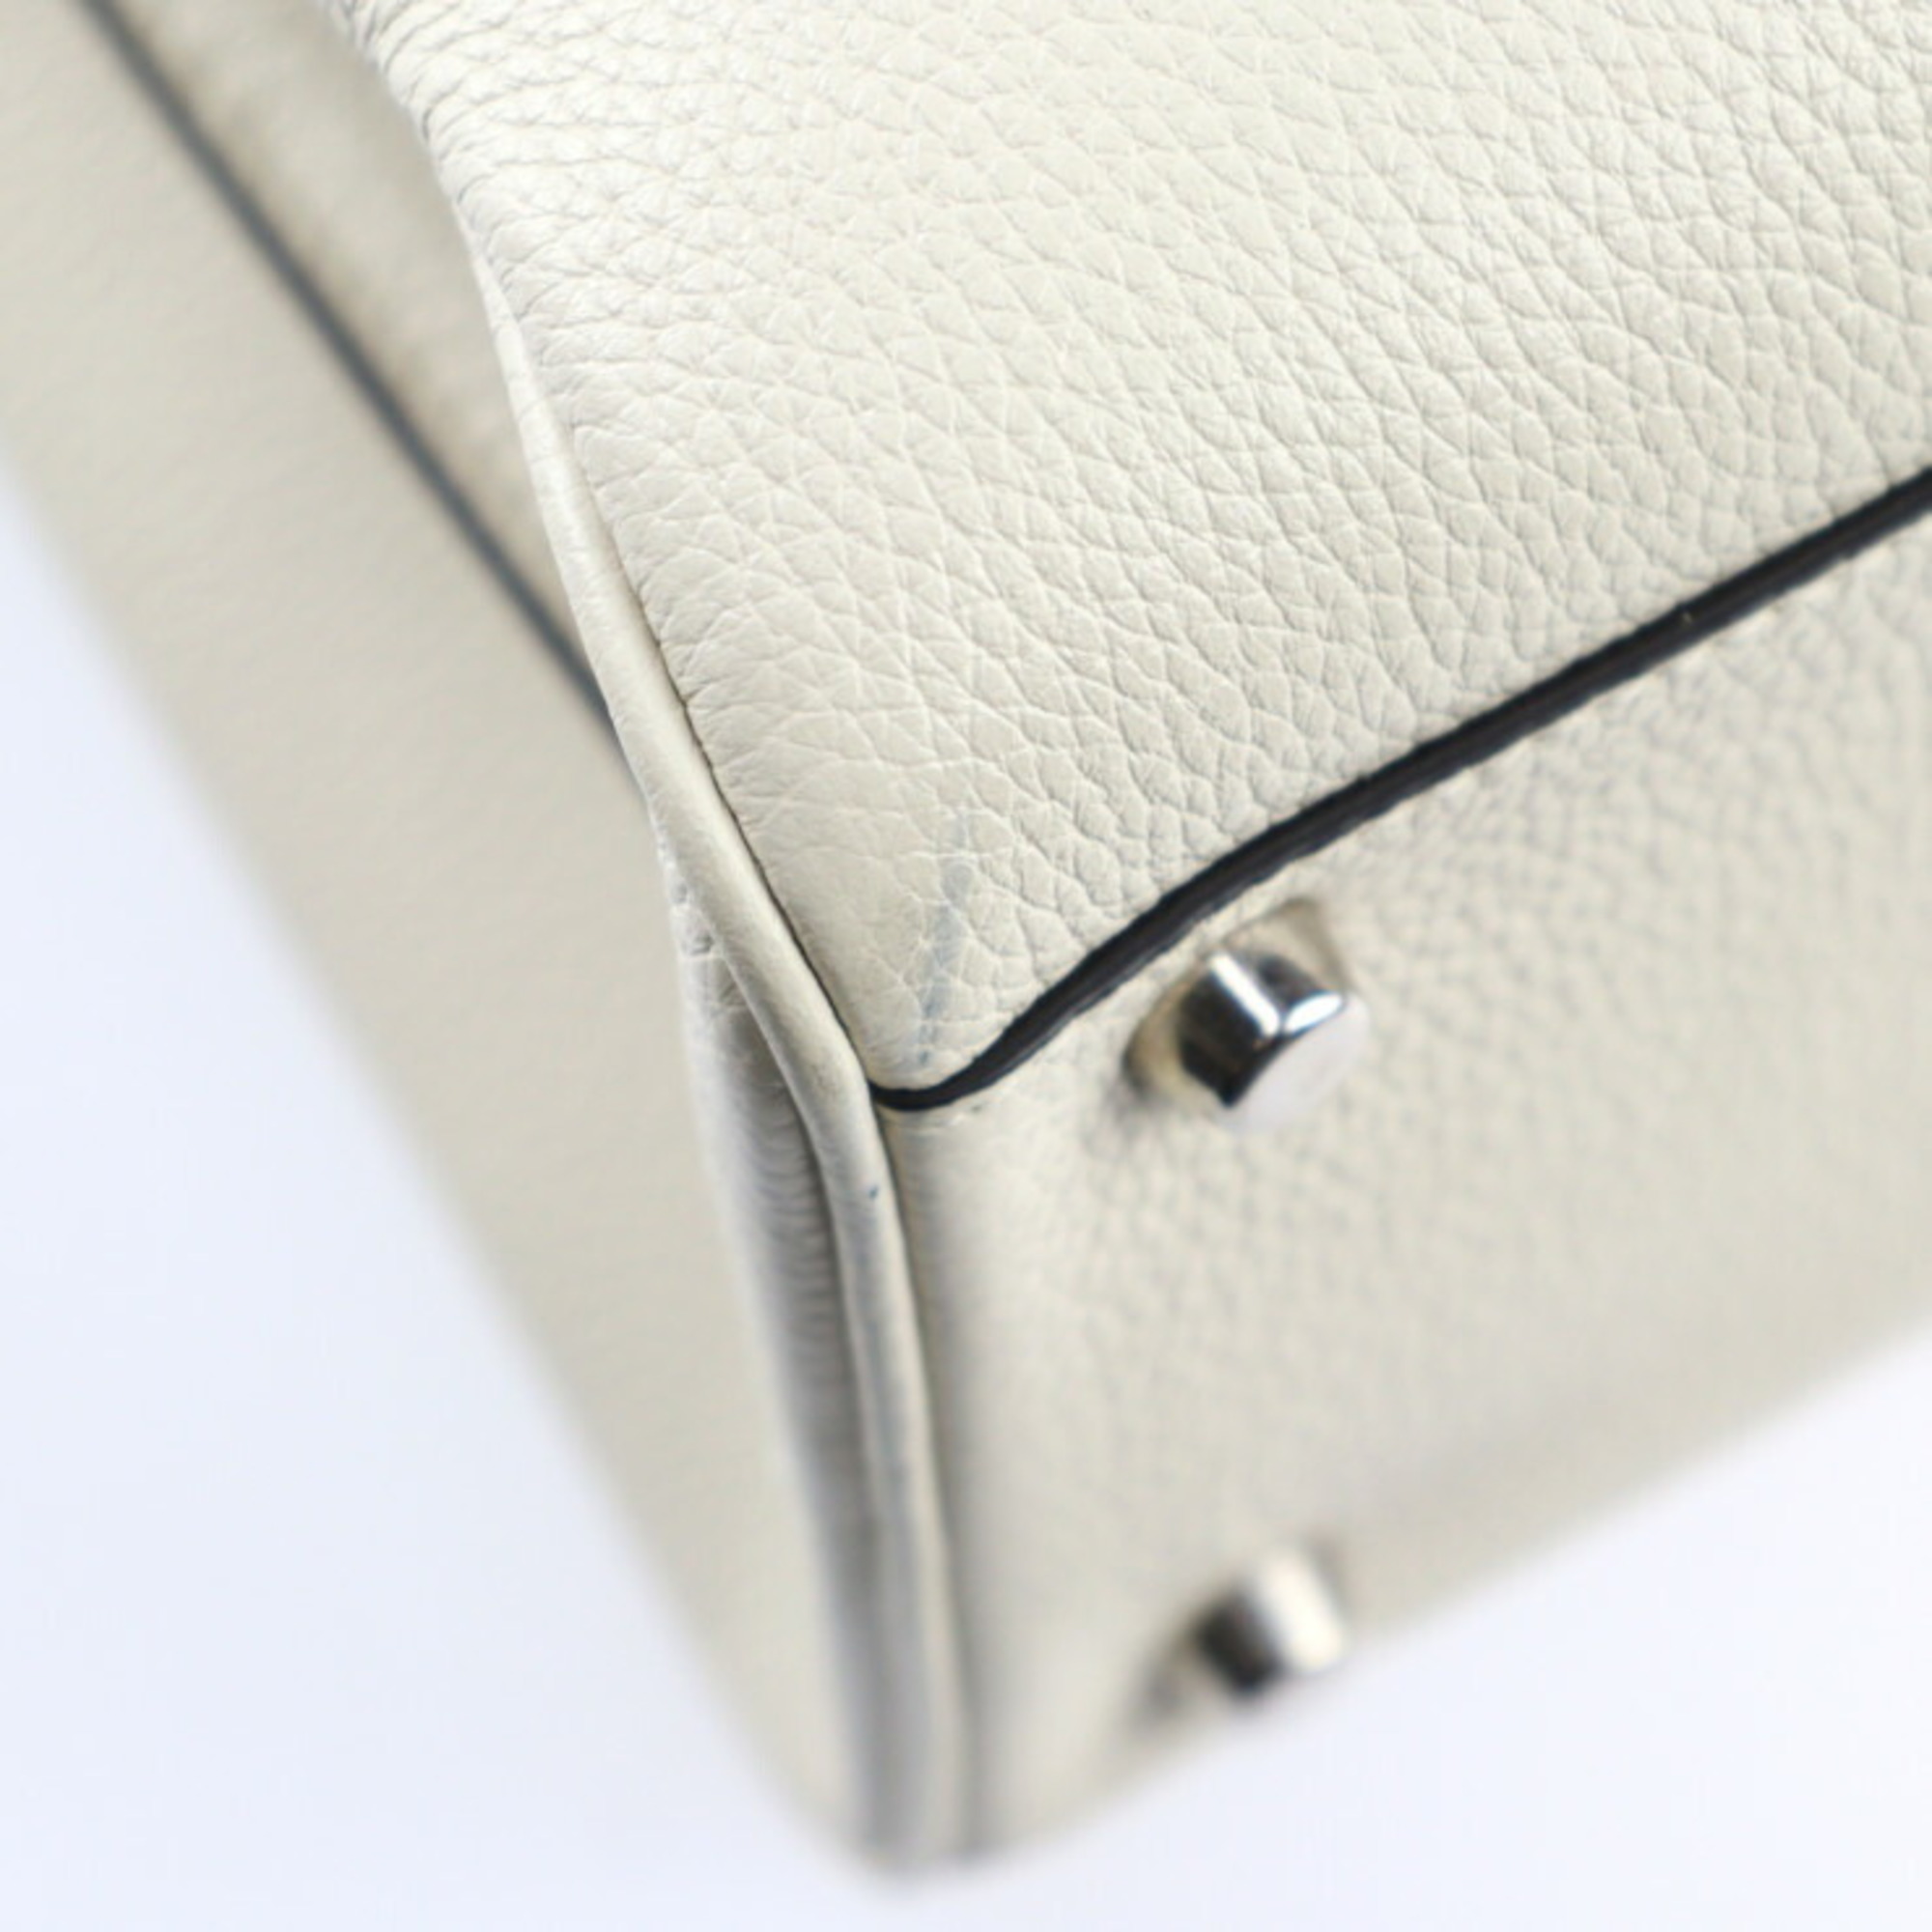 GUCCI Gucci Zumi Medium Top Handle Horsebit Handbag 564714 Leather Cream Silver Hardware Gold 2WAY Shoulder Bag